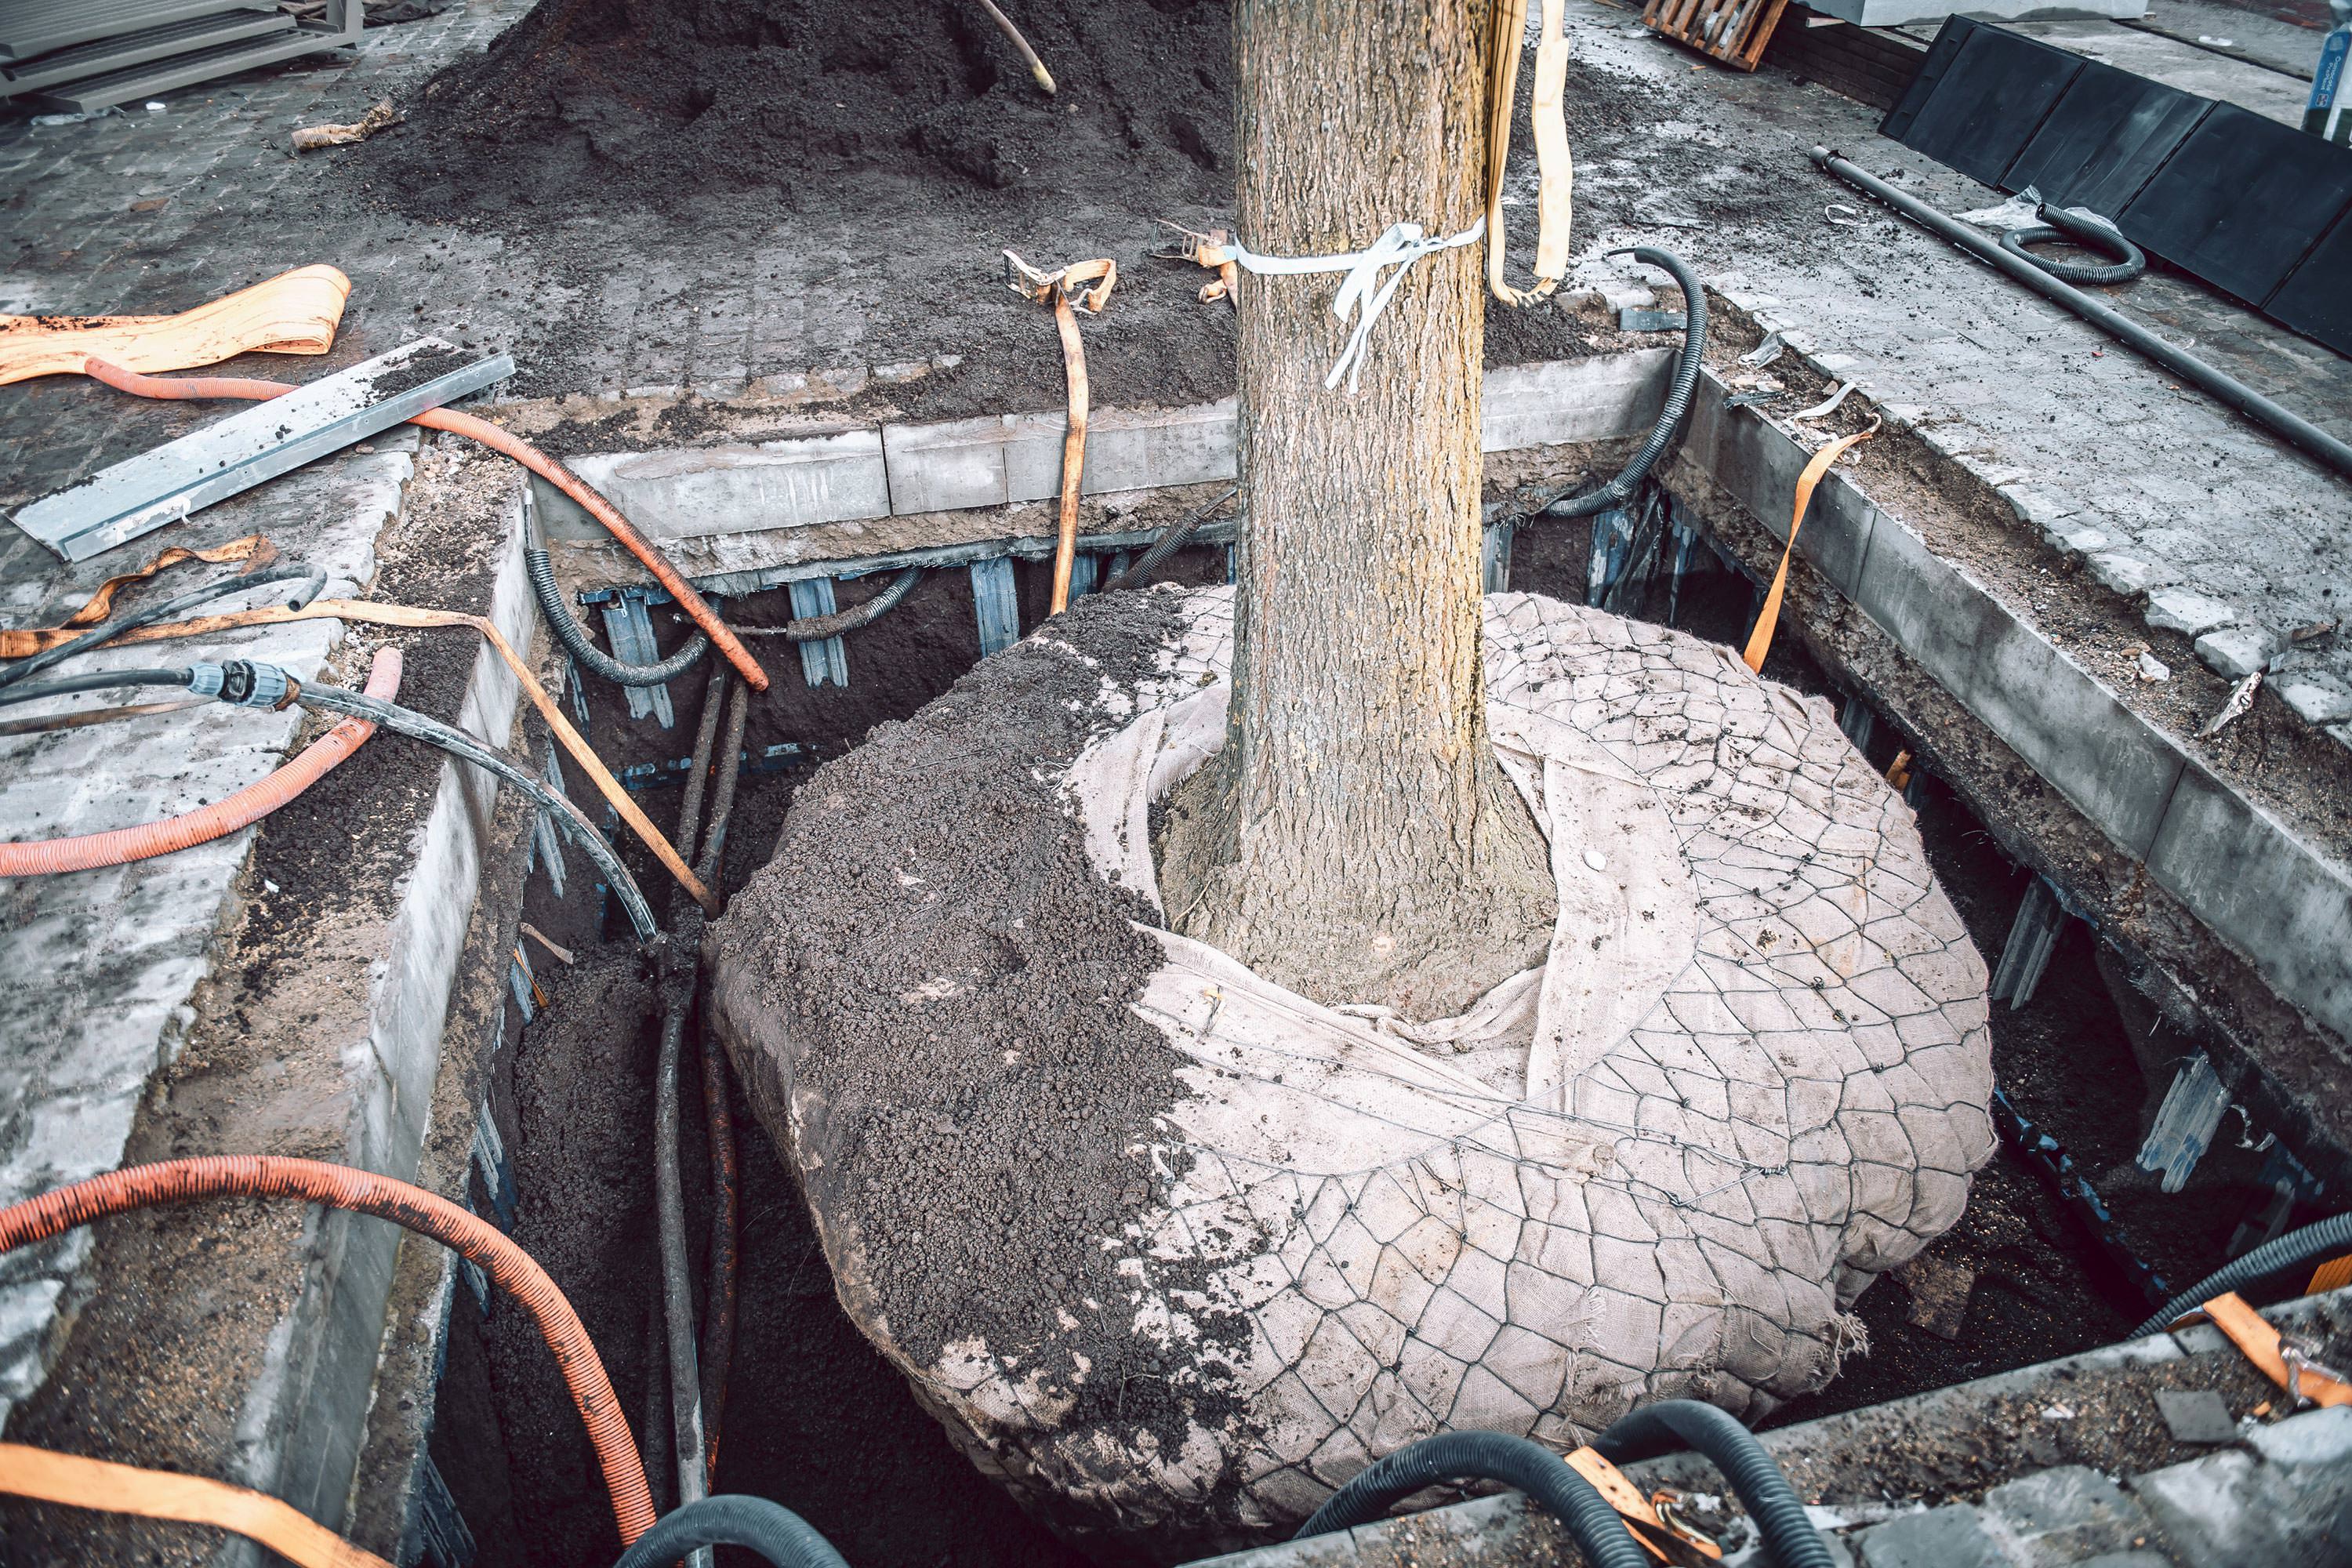 TreeTank – root chamber system